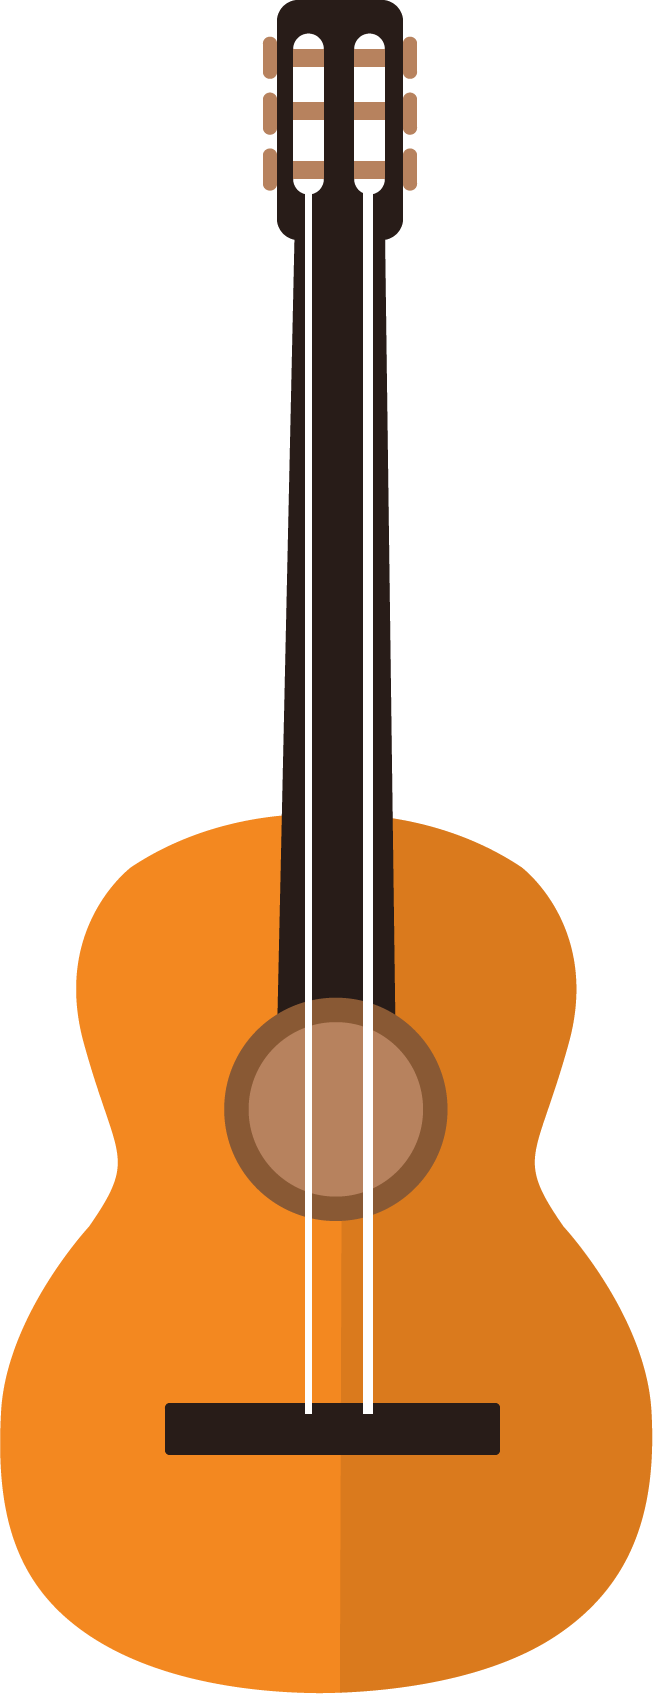 Guitar guitar design